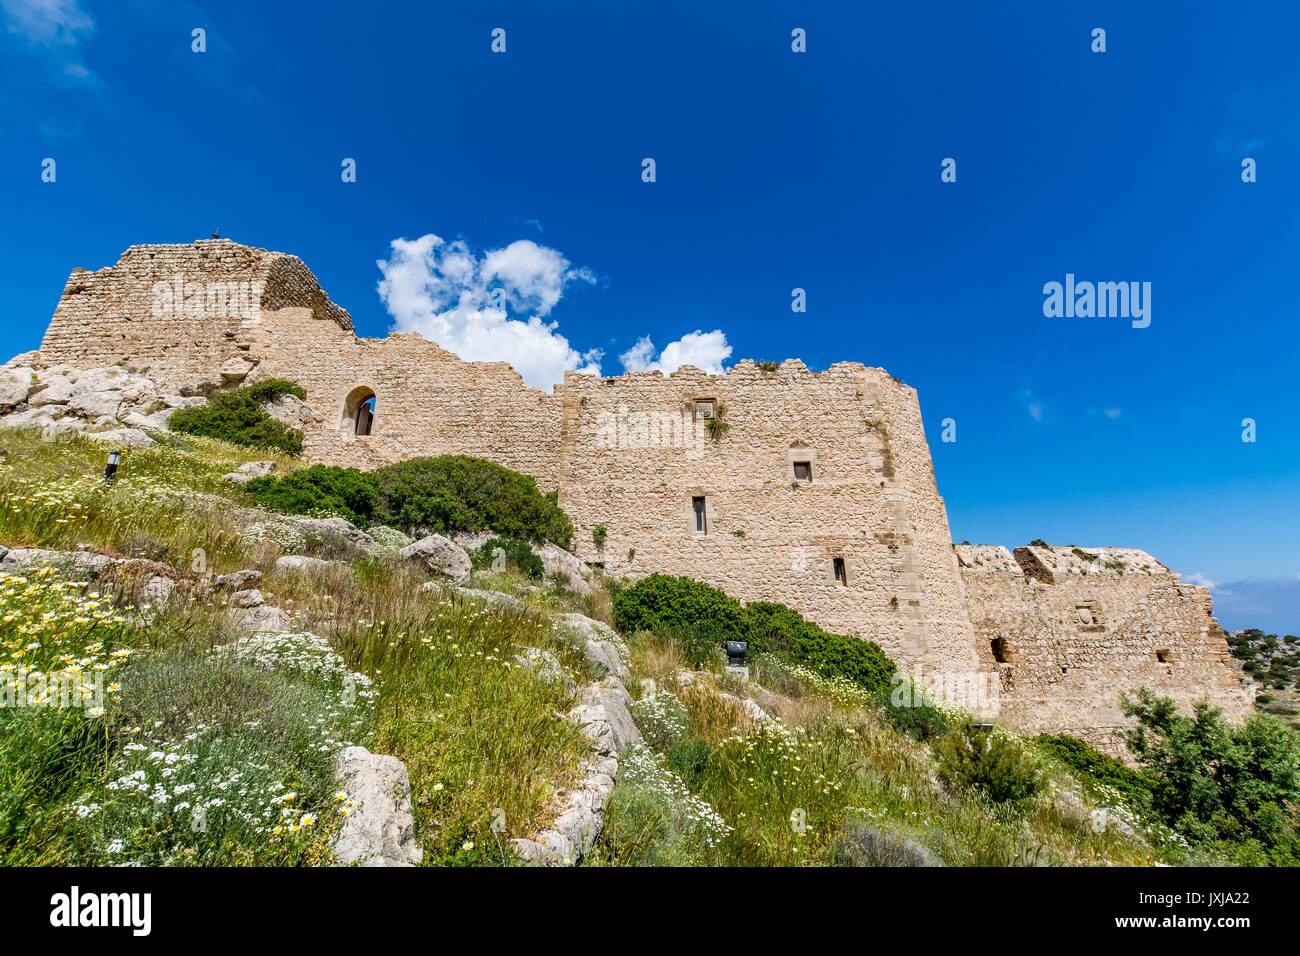 Panoramablick auf die kritinia Castle - Kastellos, Insel Rhodos, Griechenland Stockfoto